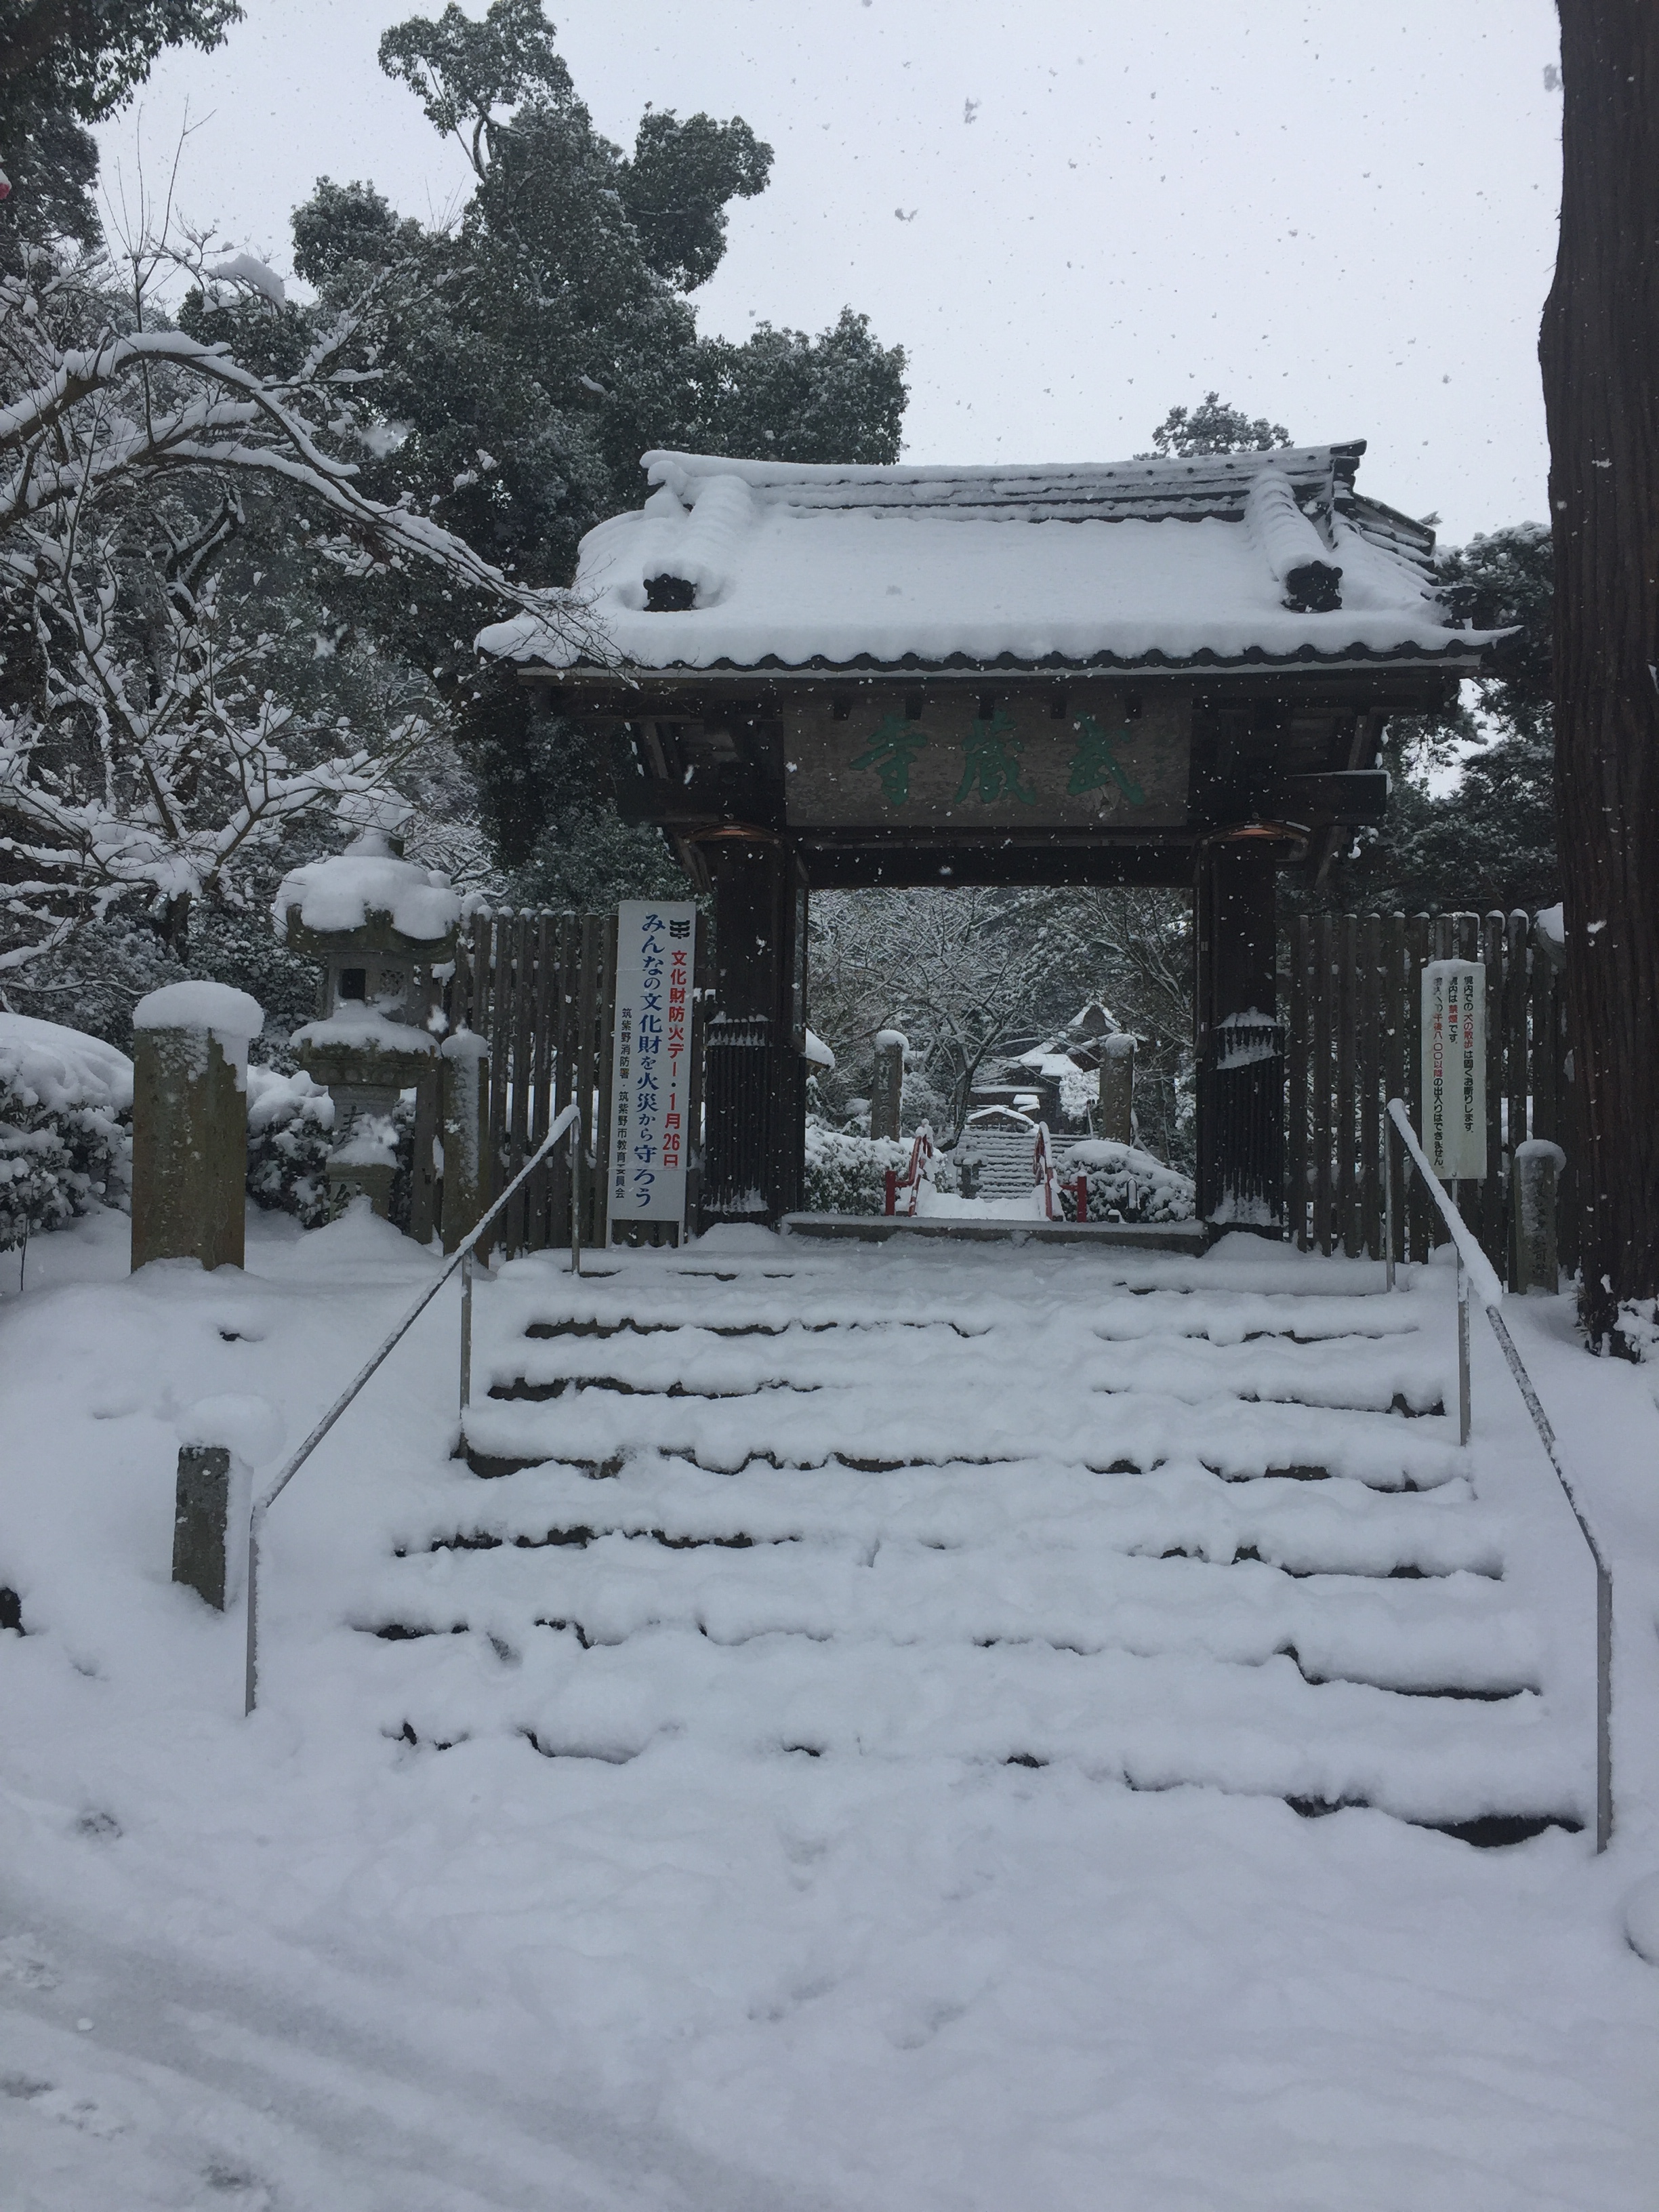 Busoji Temple